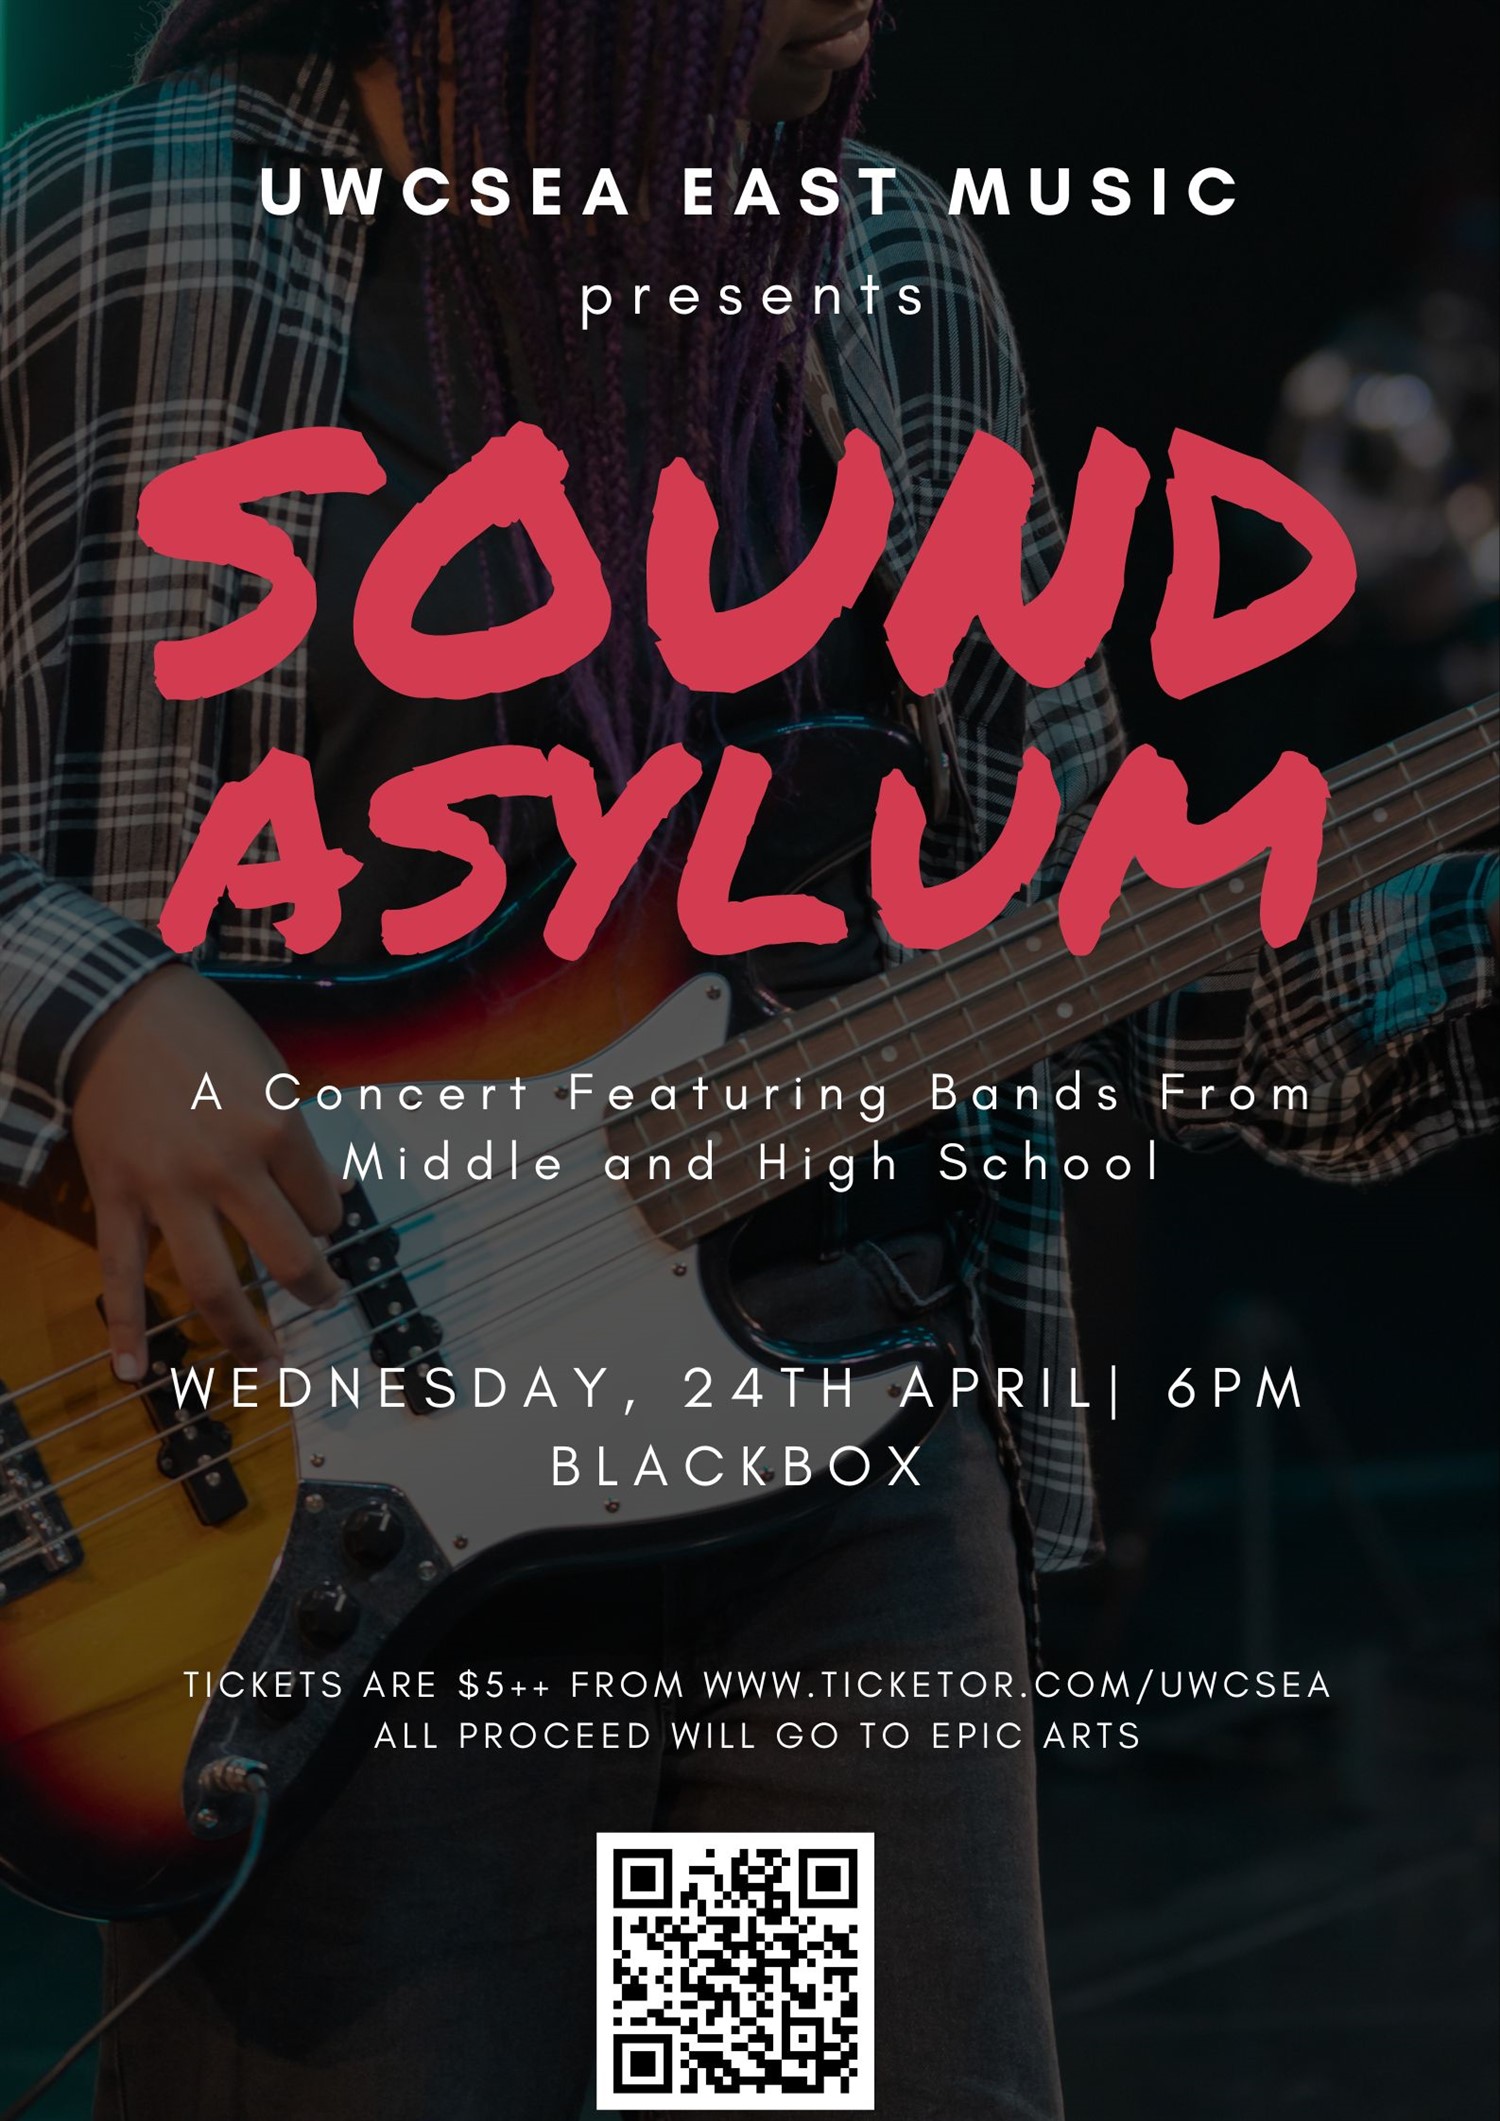 UWCSEA East Music Presents : Sound Asylum (GC00000061)  on avr. 24, 18:00@Black Box @ UWCSEA East - Achetez des billets et obtenez des informations surUWCSEA Ticket Hub uwcsea